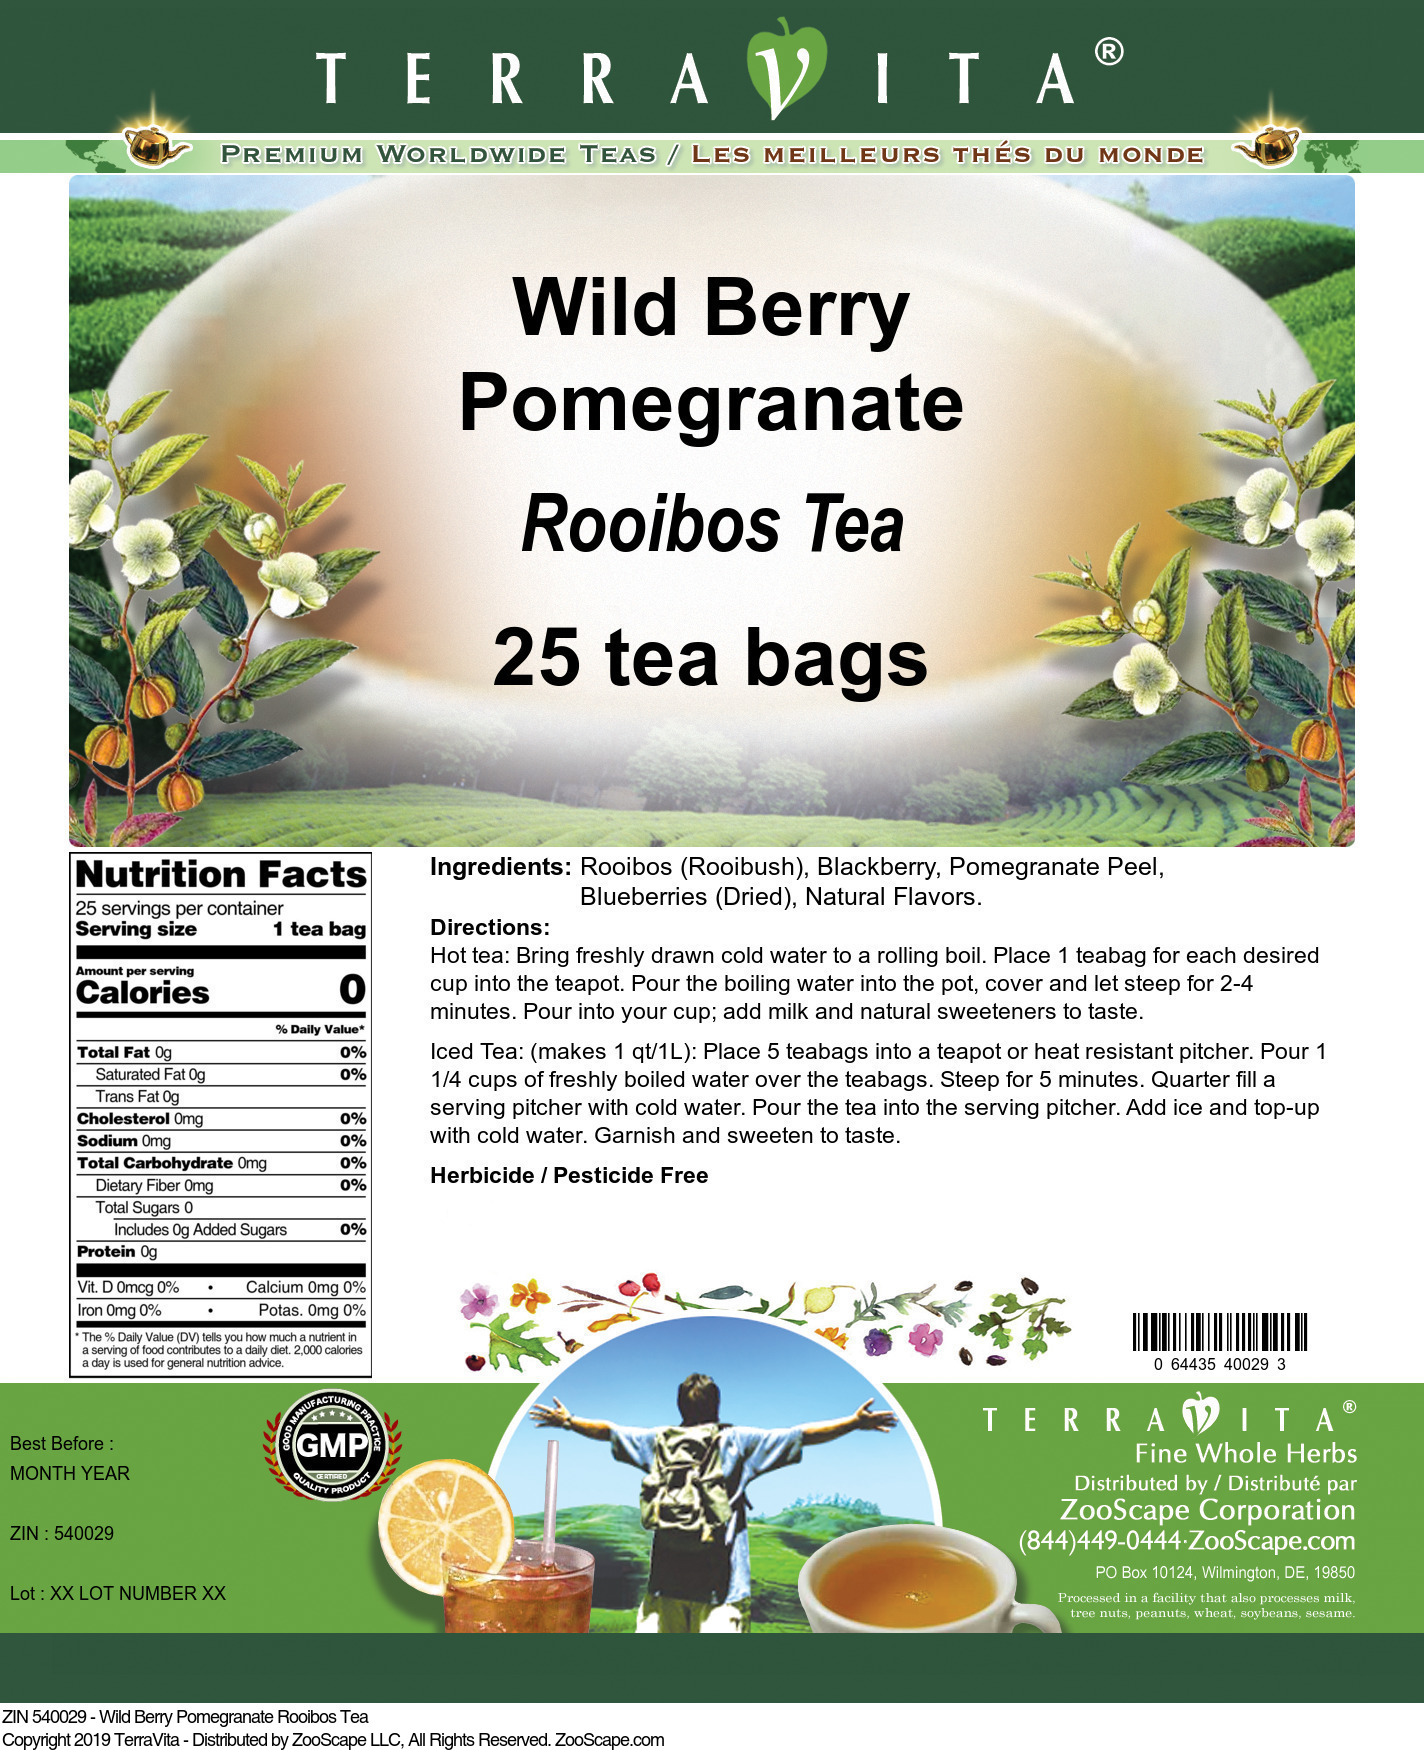 Wild Berry Pomegranate Rooibos Tea - Label